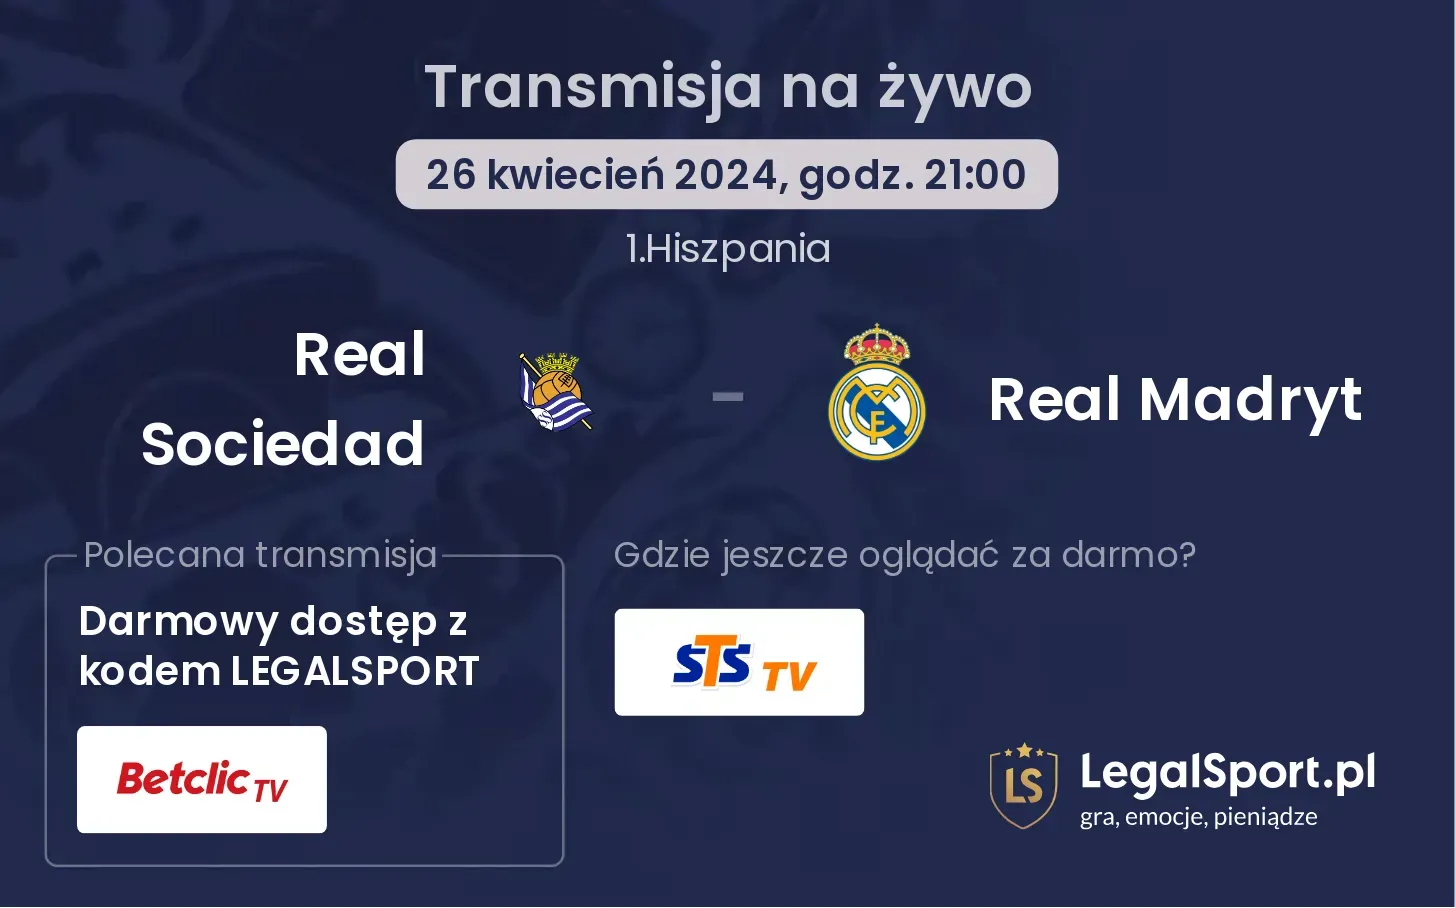 Real Sociedad - Real Madryt transmisja na żywo